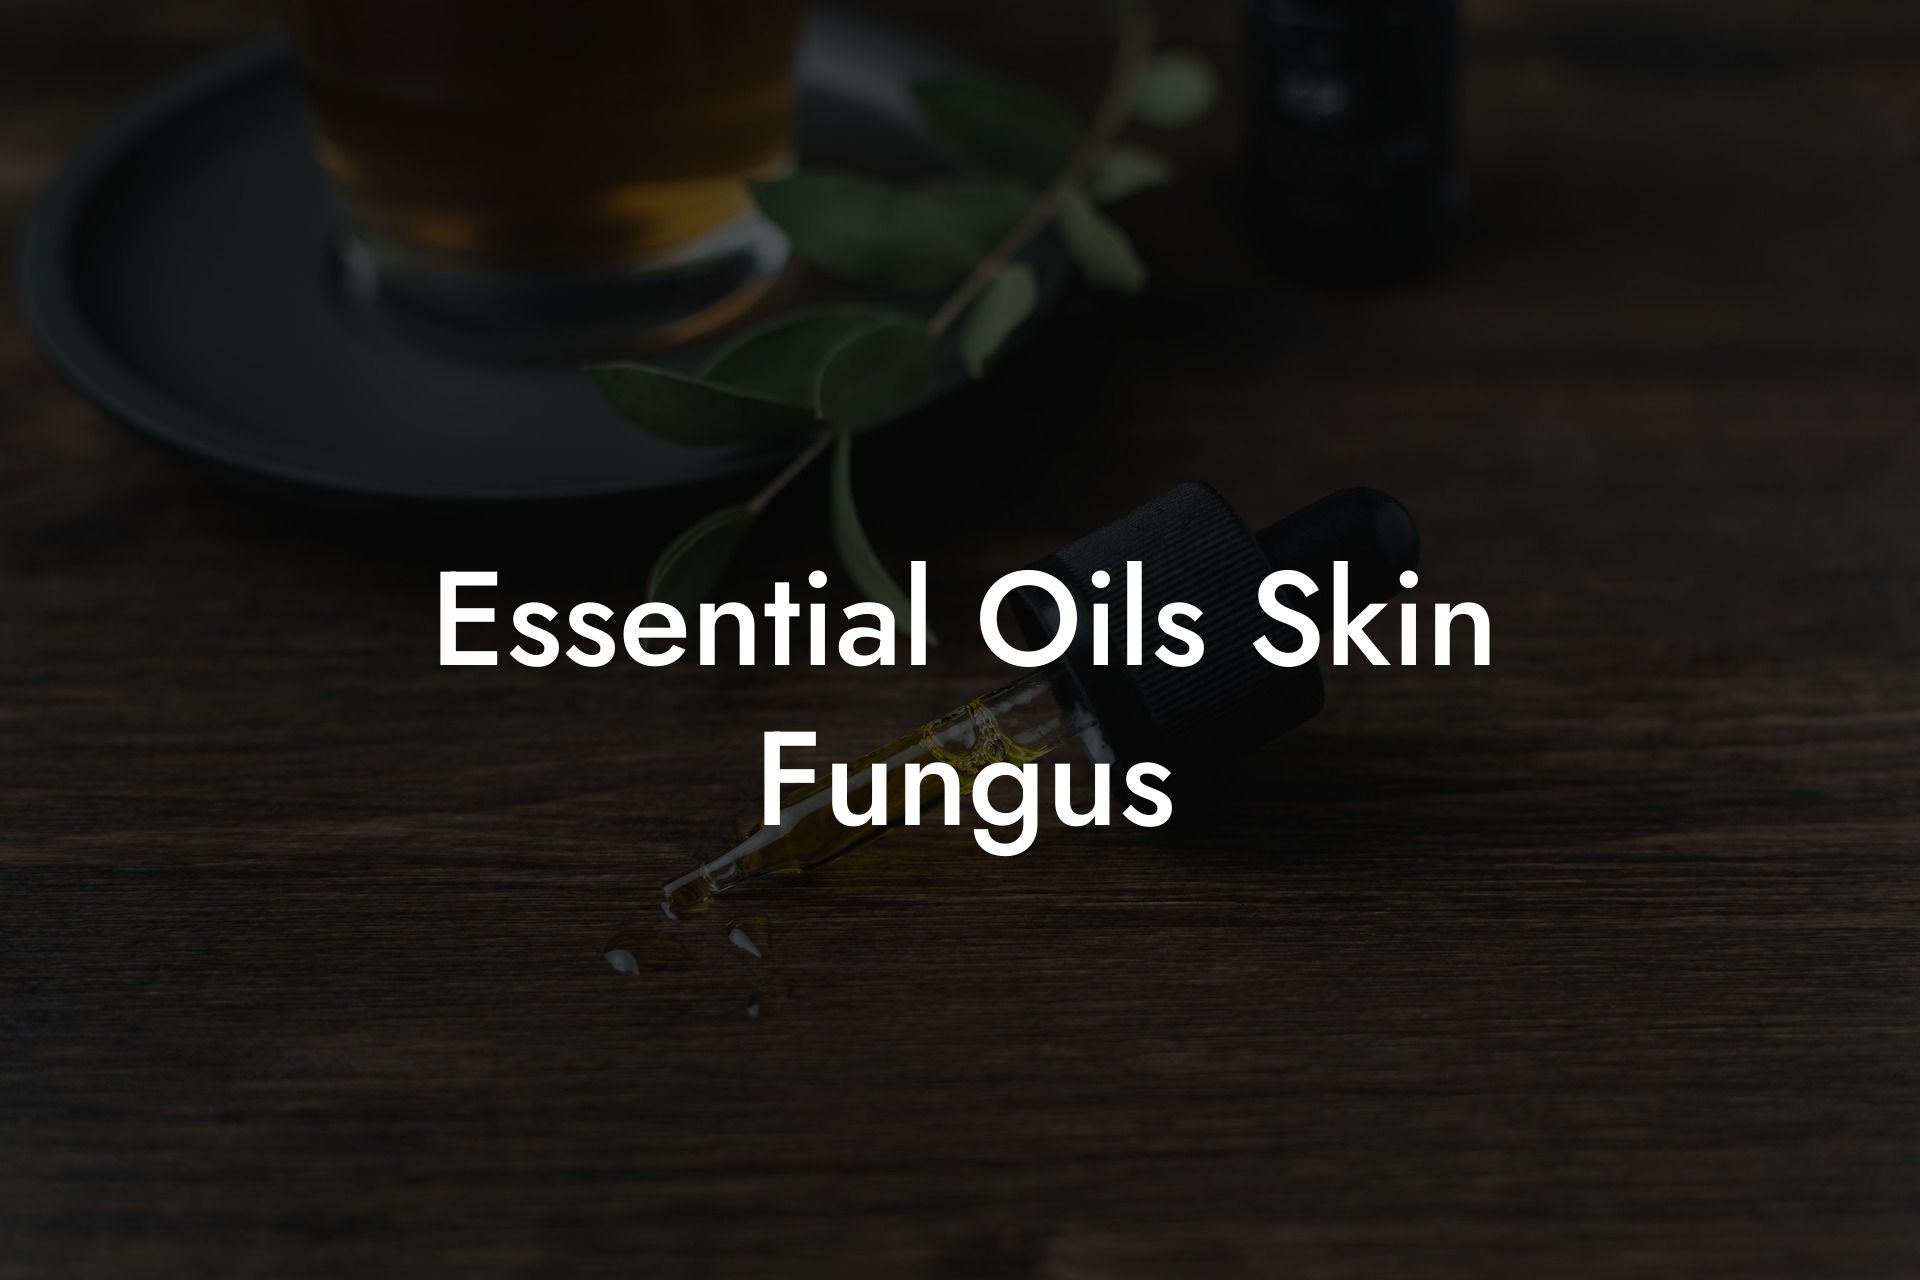 Essential Oils Skin Fungus